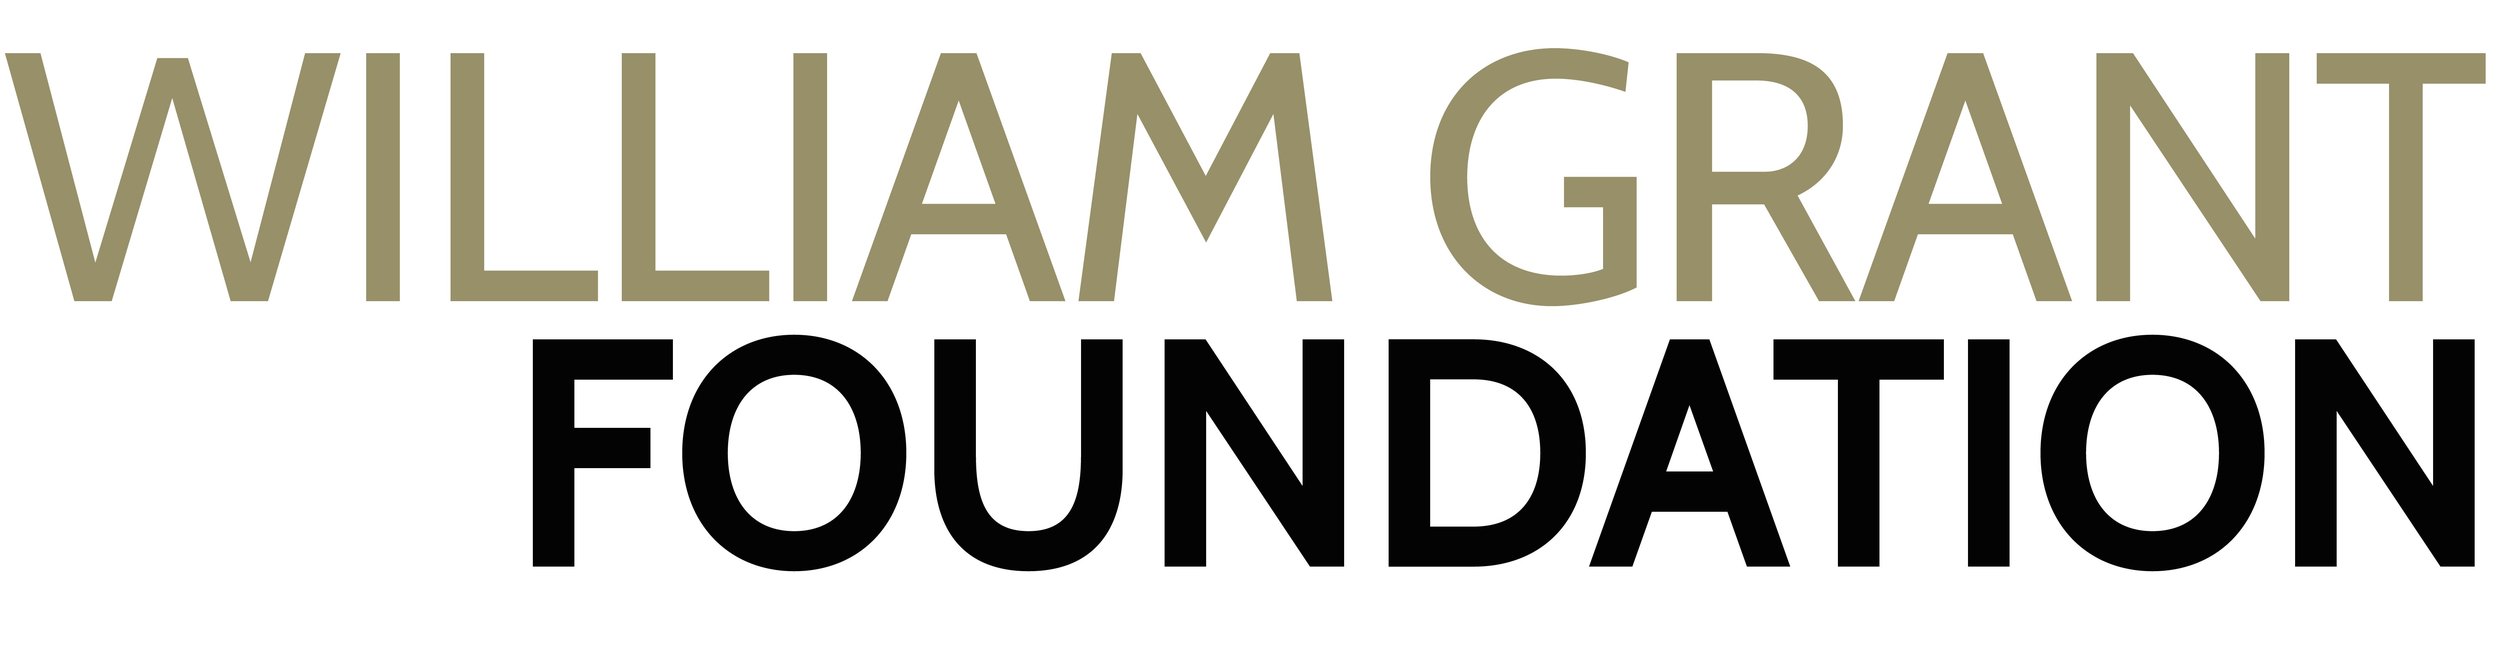 William Grant Foundation LOGO.jpg